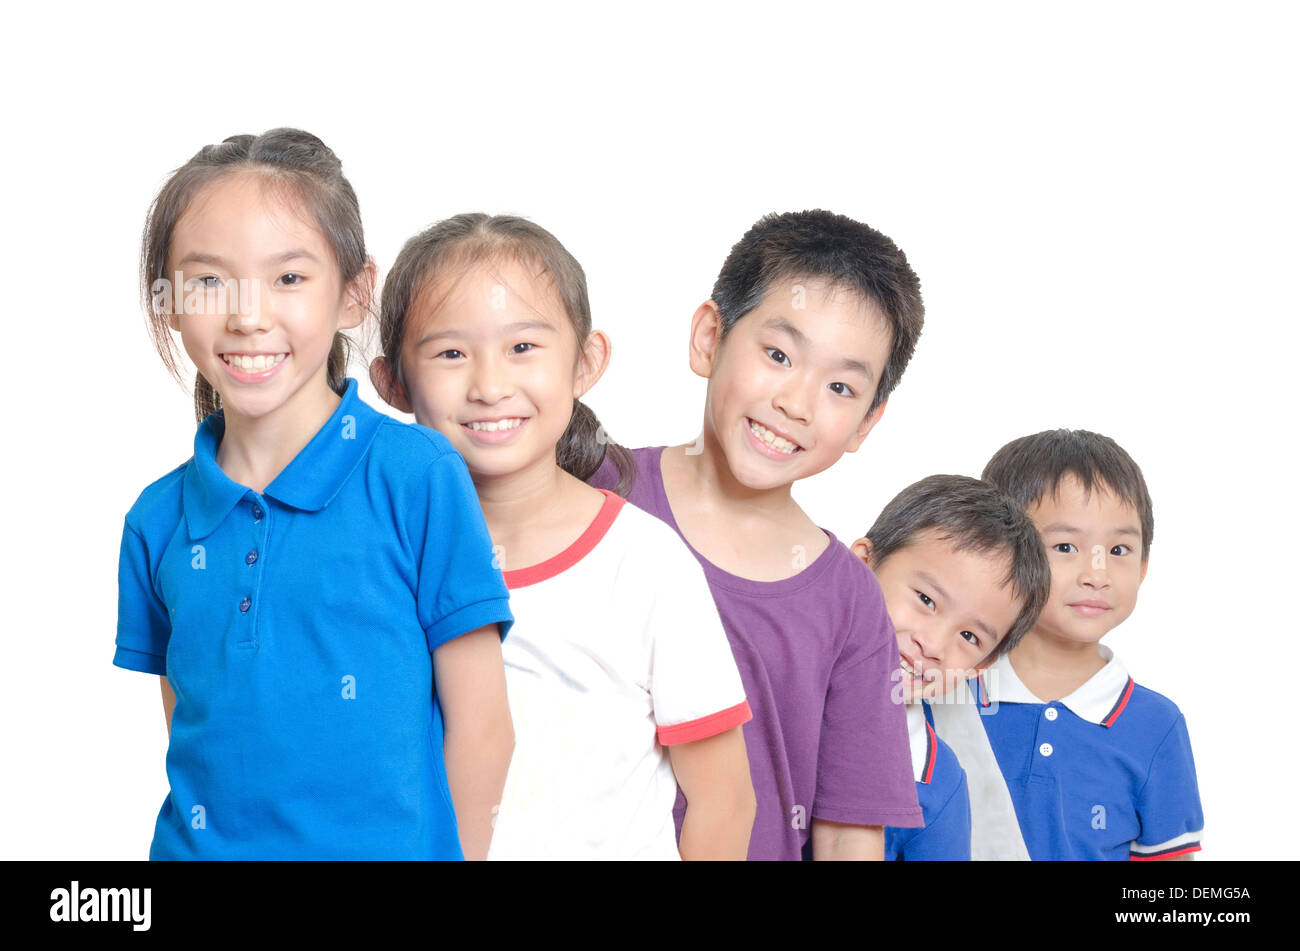 Five children smiling on white background Stock Photo